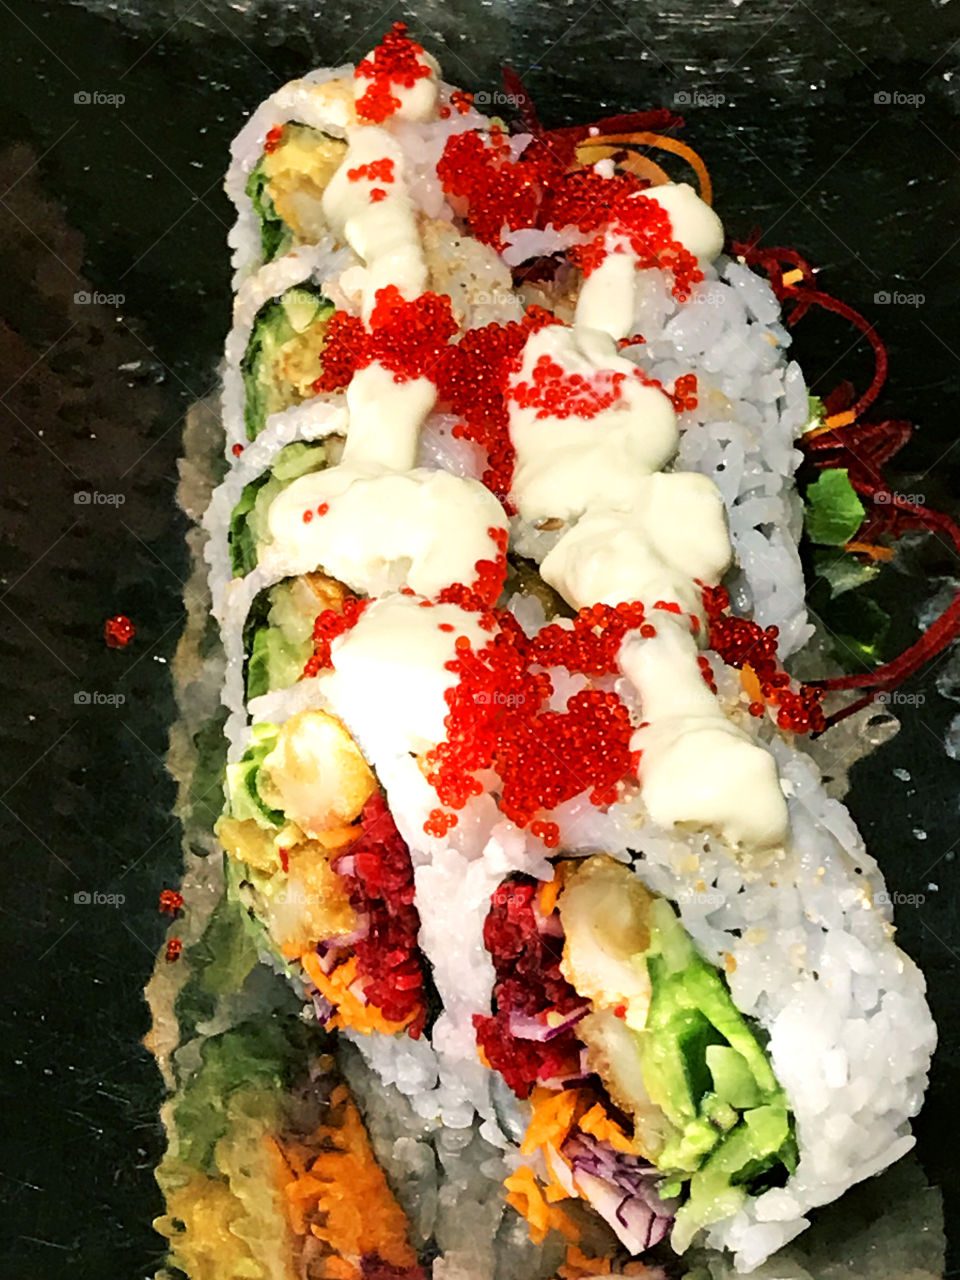 A plate of beautifully presented sushi of tempura prawn, crab, radish, carrots, beets, cucumber, & avocado, rice & nori topped with mayonnaise & fish roe. Celebrating my husbands birthday at our fav sushi restaurant! 🥢